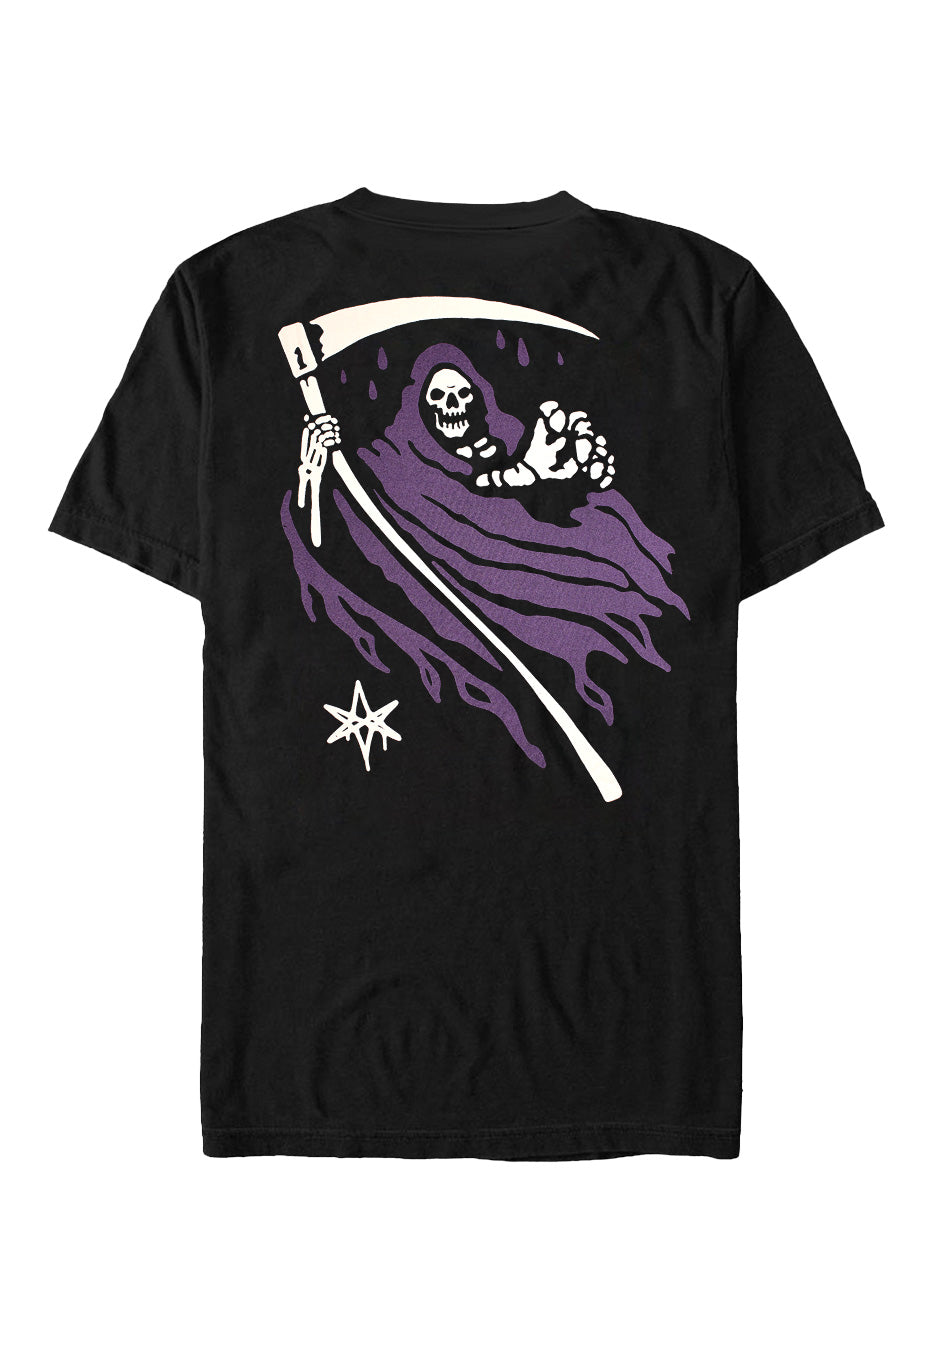 Bring Me The Horizon - Reaper - T-Shirt